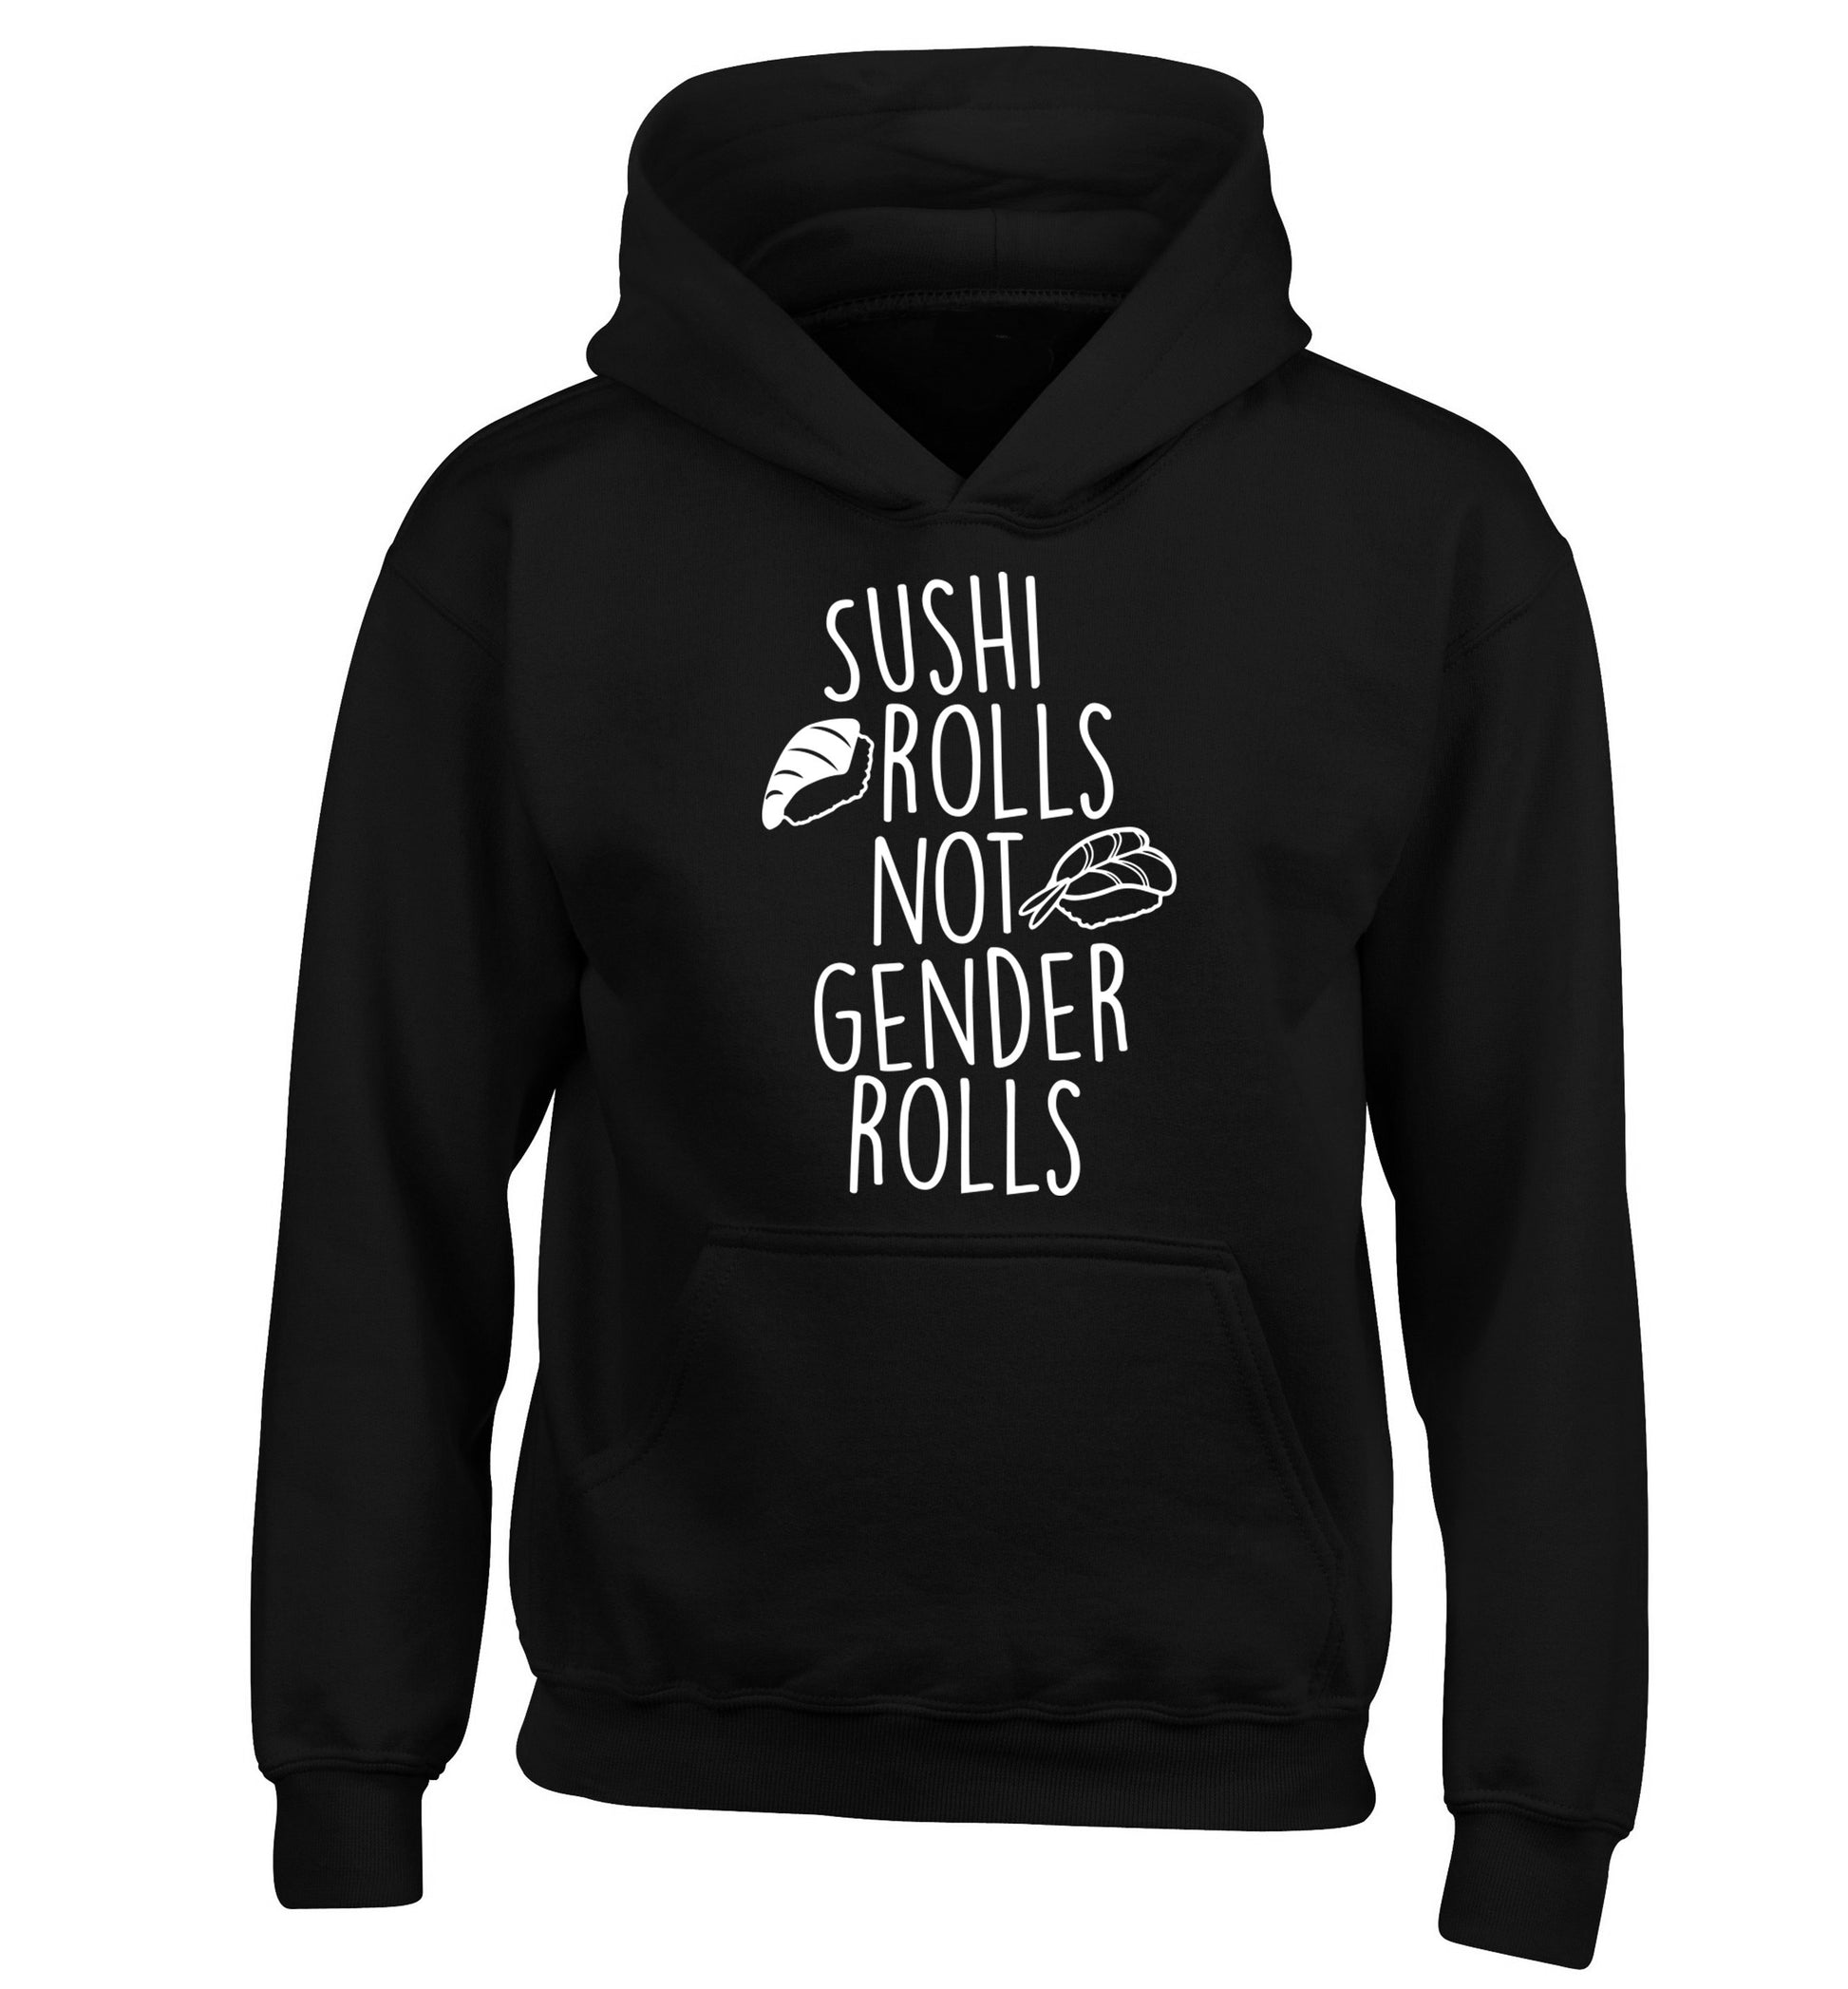 Sushi rolls not gender rolls children's black hoodie 12-14 Years